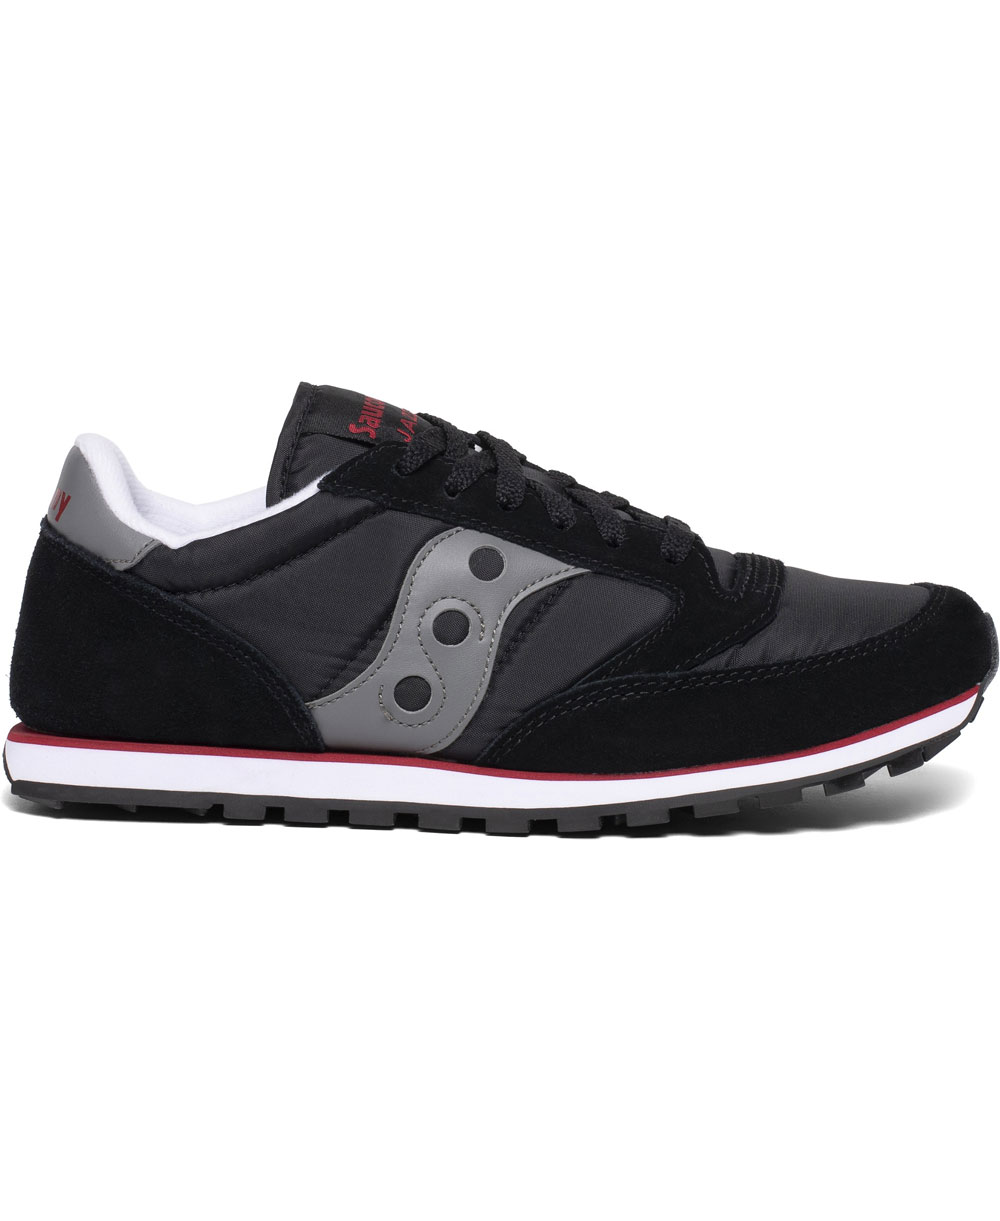 Saucony Jazz Low Pro Scarpe Sneakers Uomo Black/Grey/Red